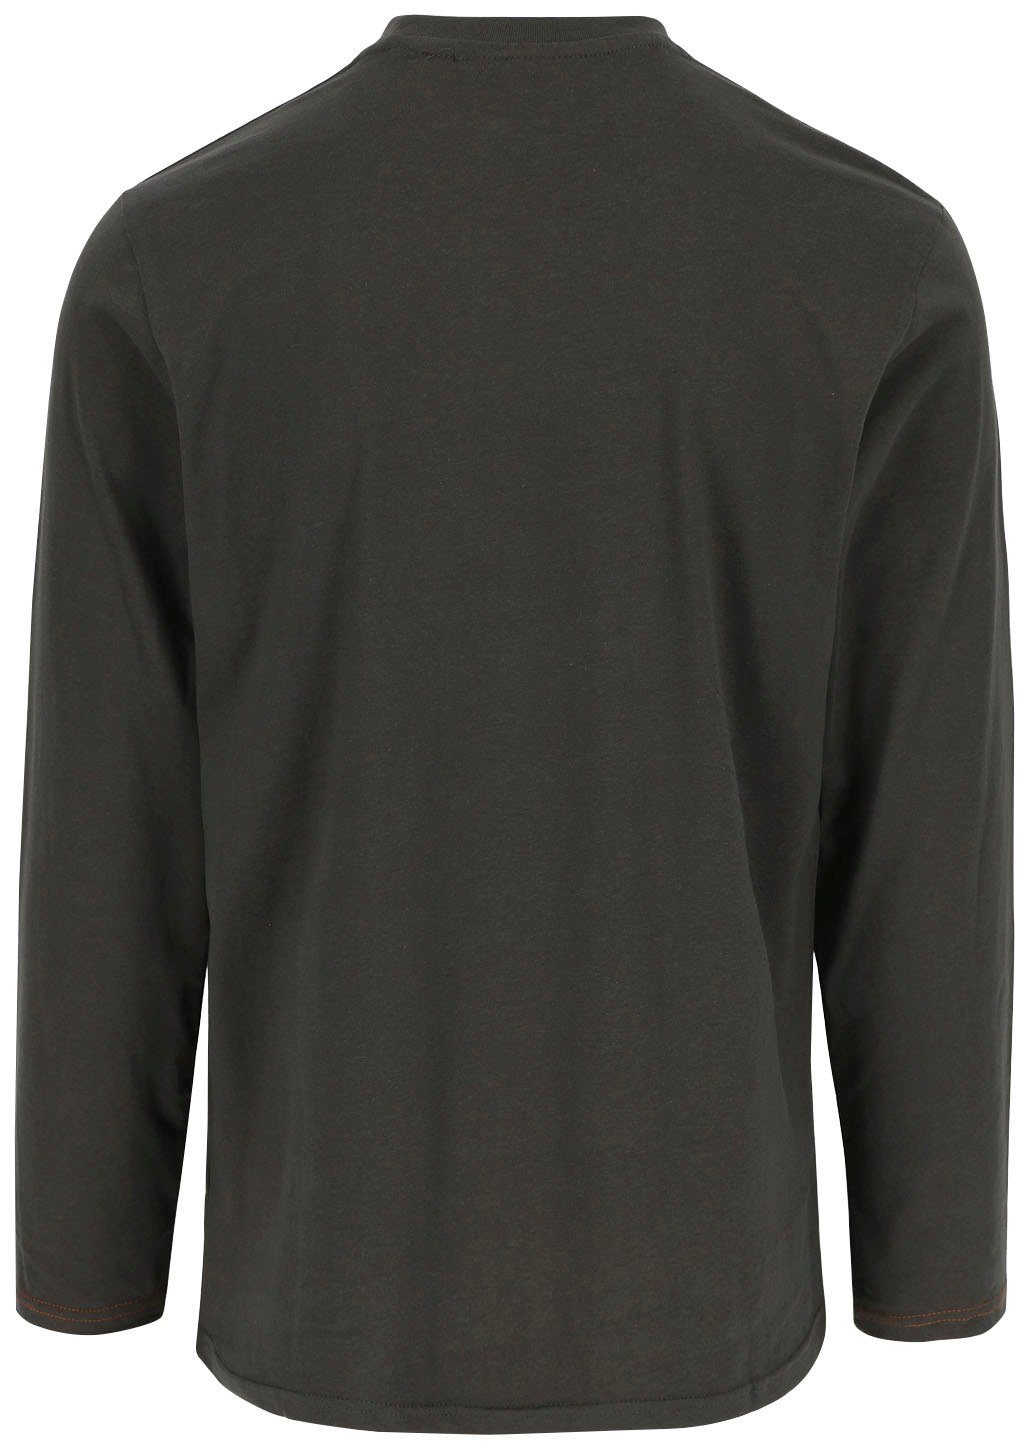 Tragegefühl, t-shirt vorgeschrumpfte Baumwolle, Herock Basic 100 % grau Langarmshirt Noet langärmlig angenehmes